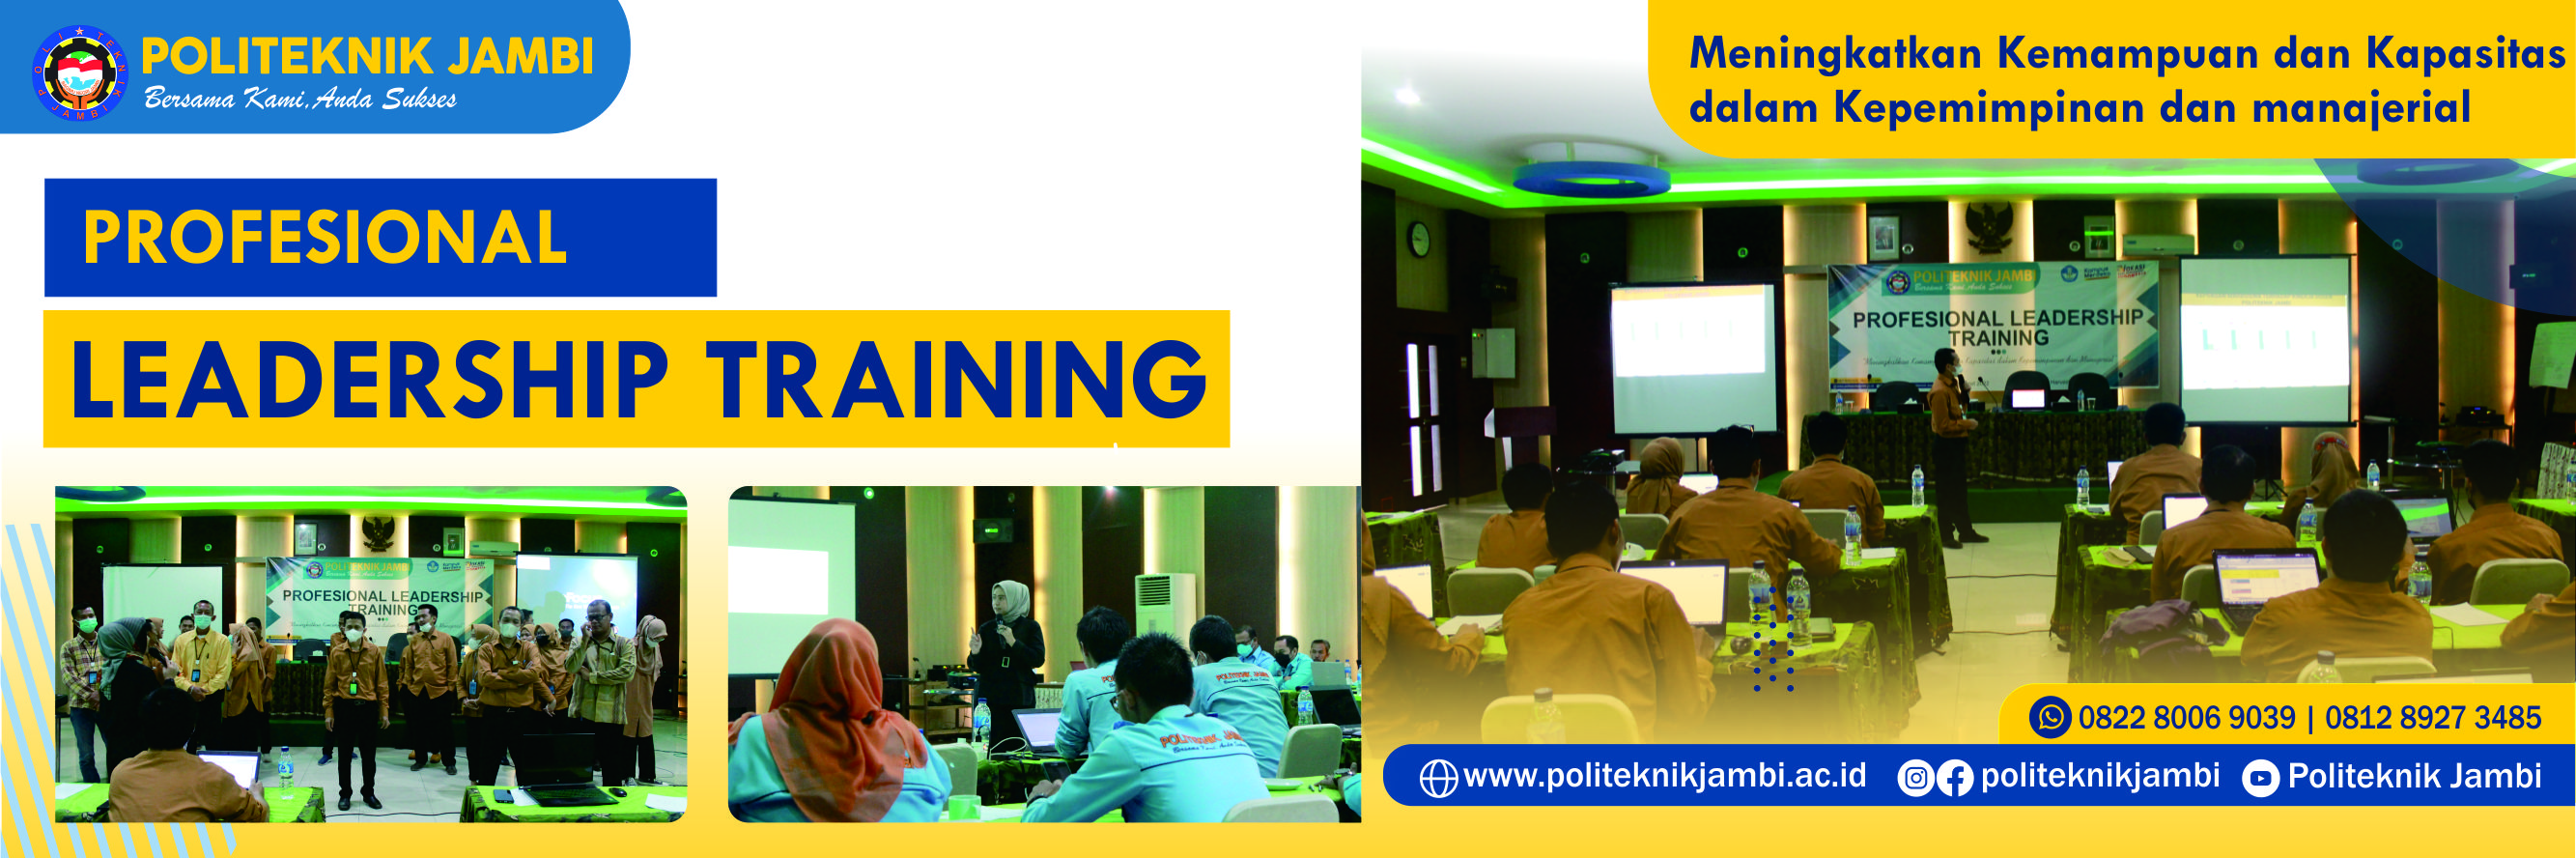 Profesional Leadership Training Civitas Politeknik Jambi